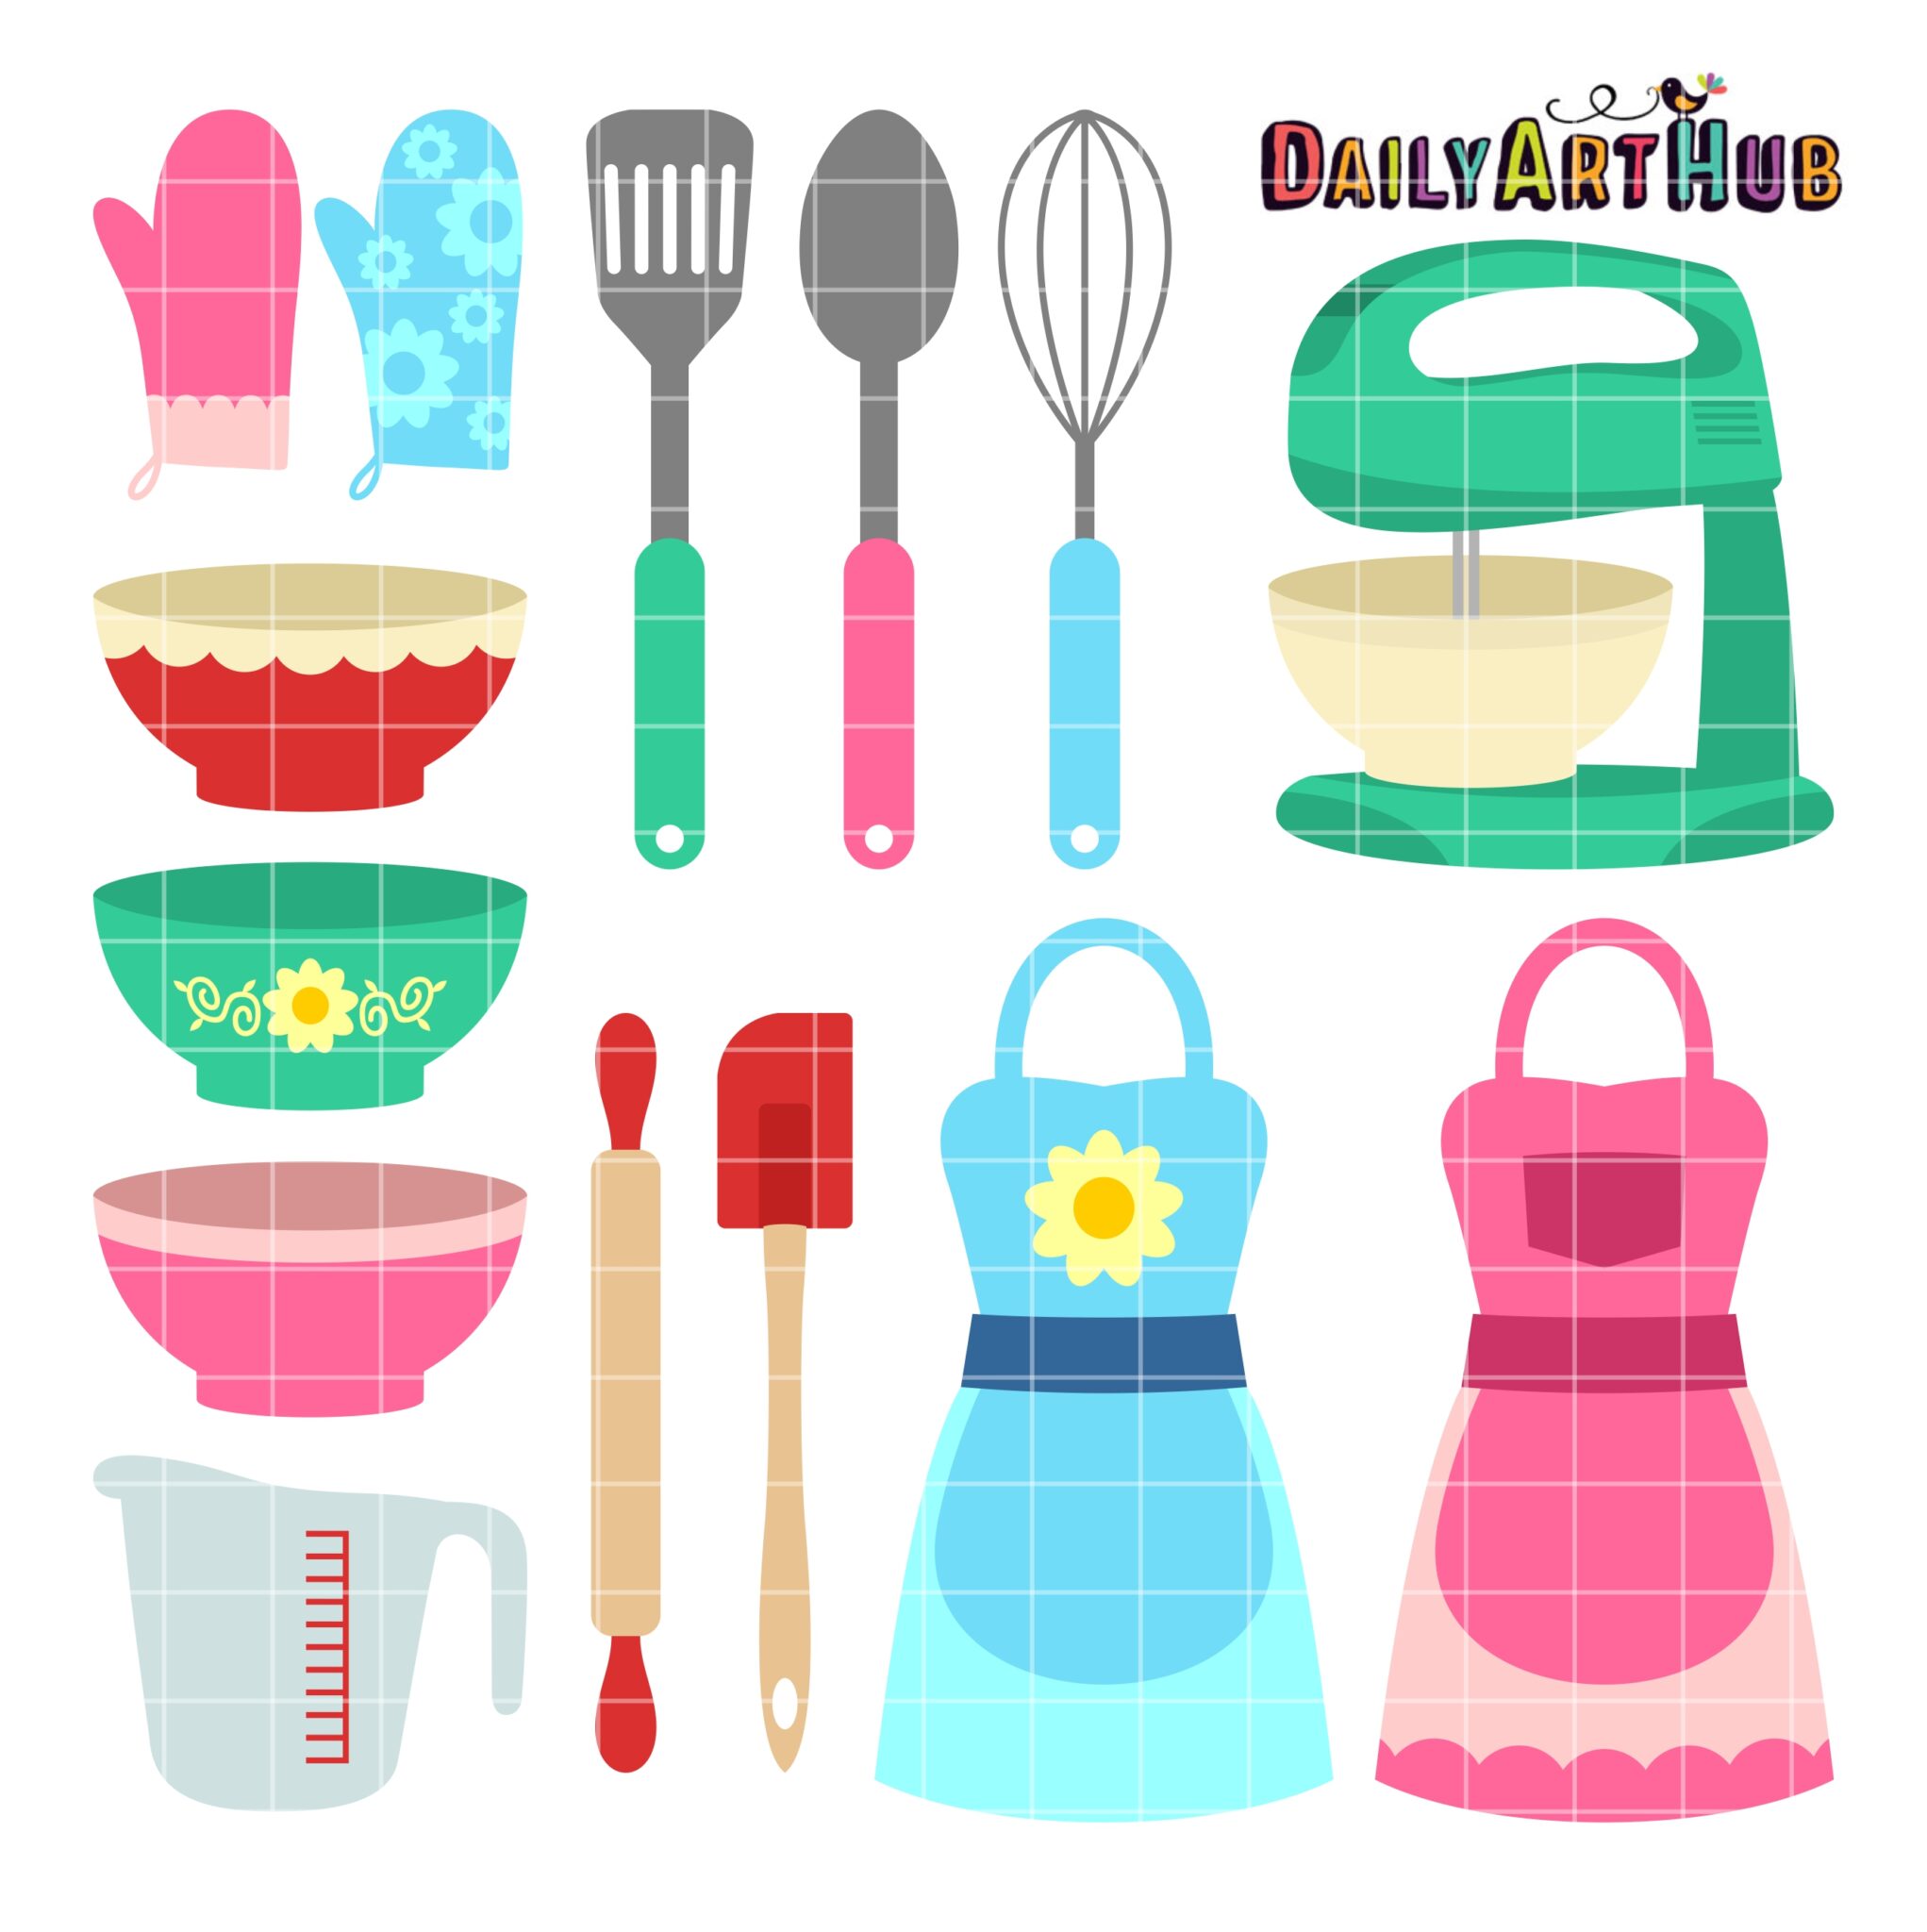 Cute Kitchen Wares Clip Art Set – Daily Art Hub // Graphics, Alphabets & SVG